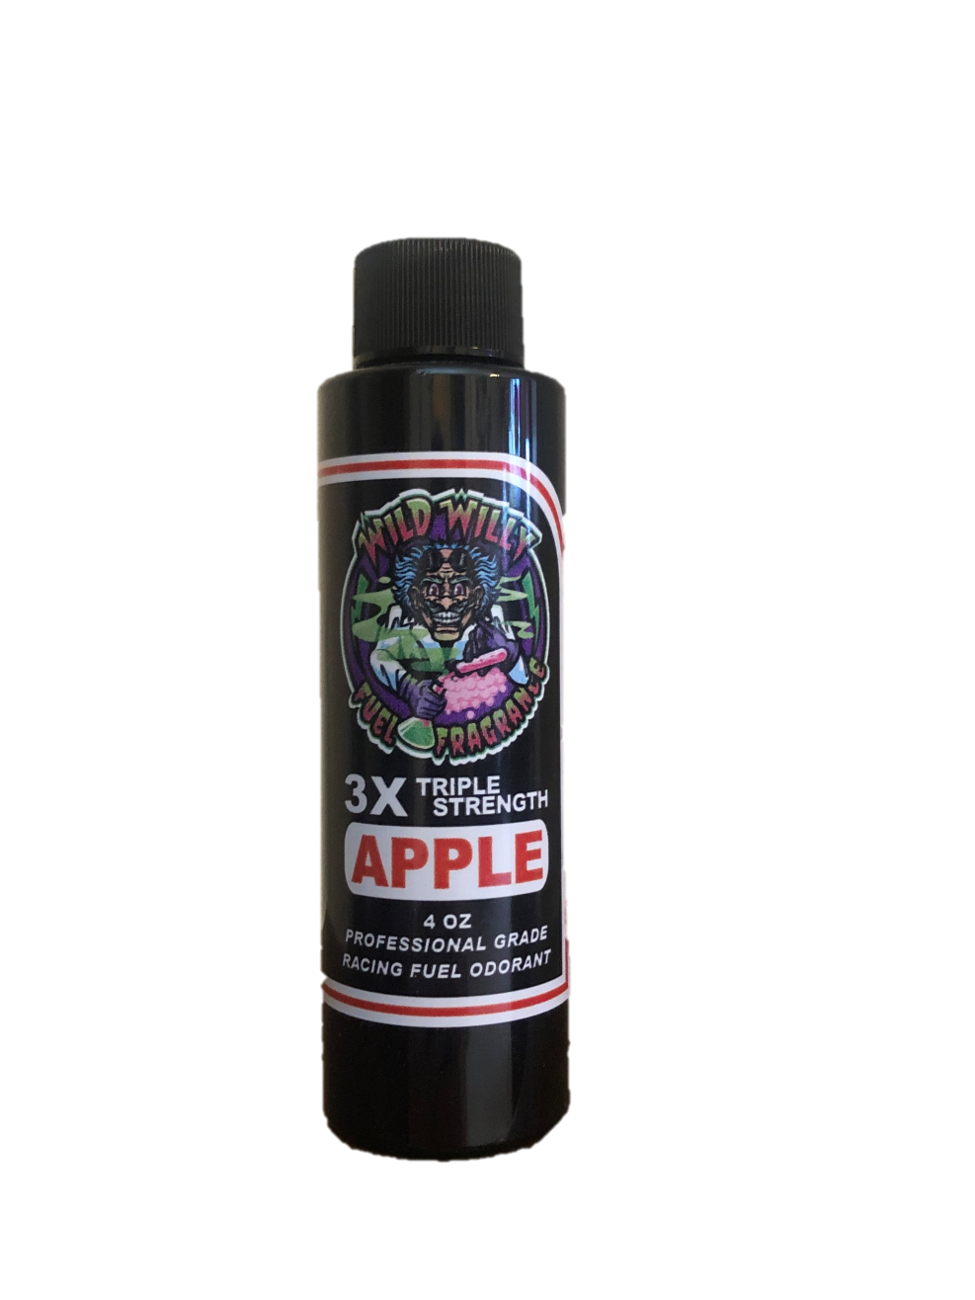 Apple - Wild Willy Fuel Fragrance - 3X Triple Strength!